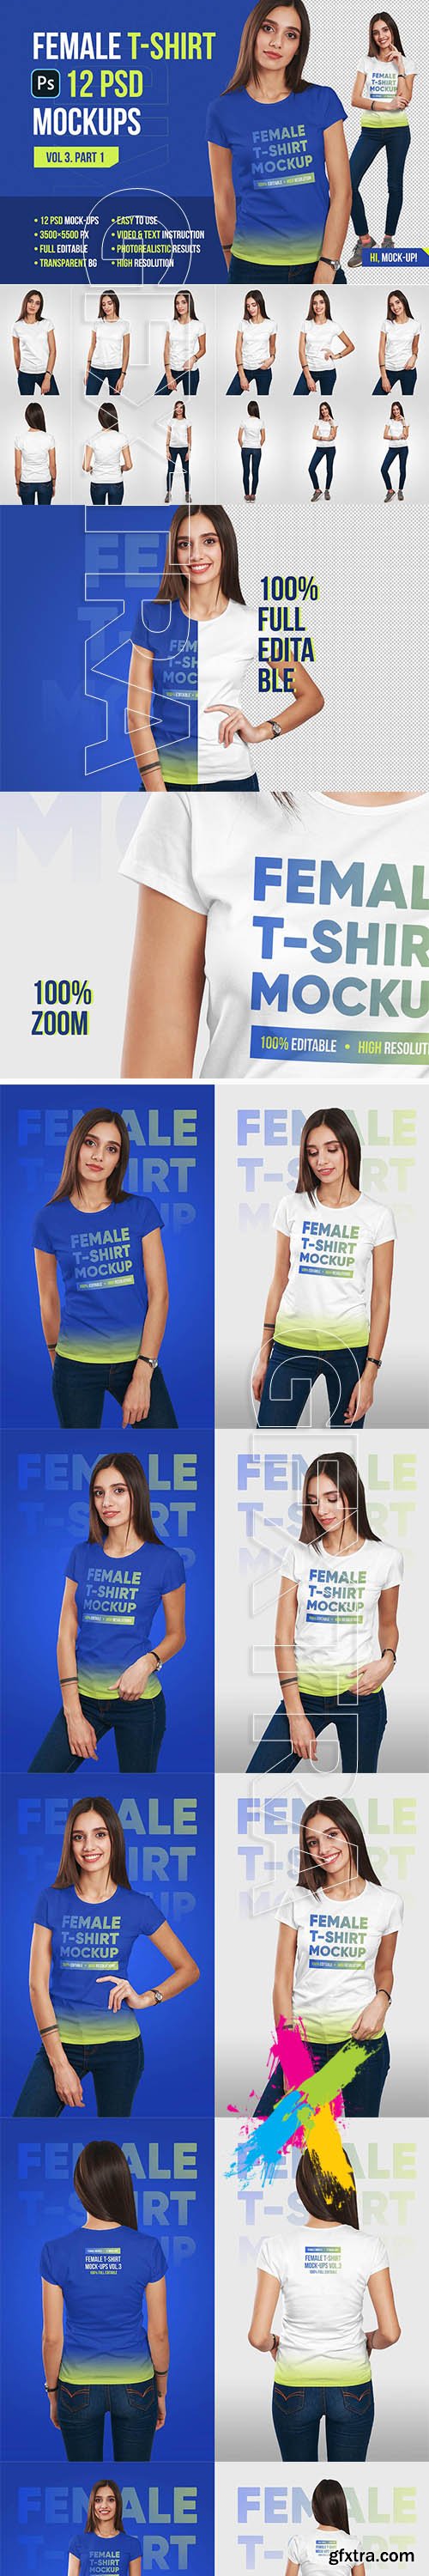 CreativeMarket - Female T-Shirt Mockups Vol 3 Part 1 5336757